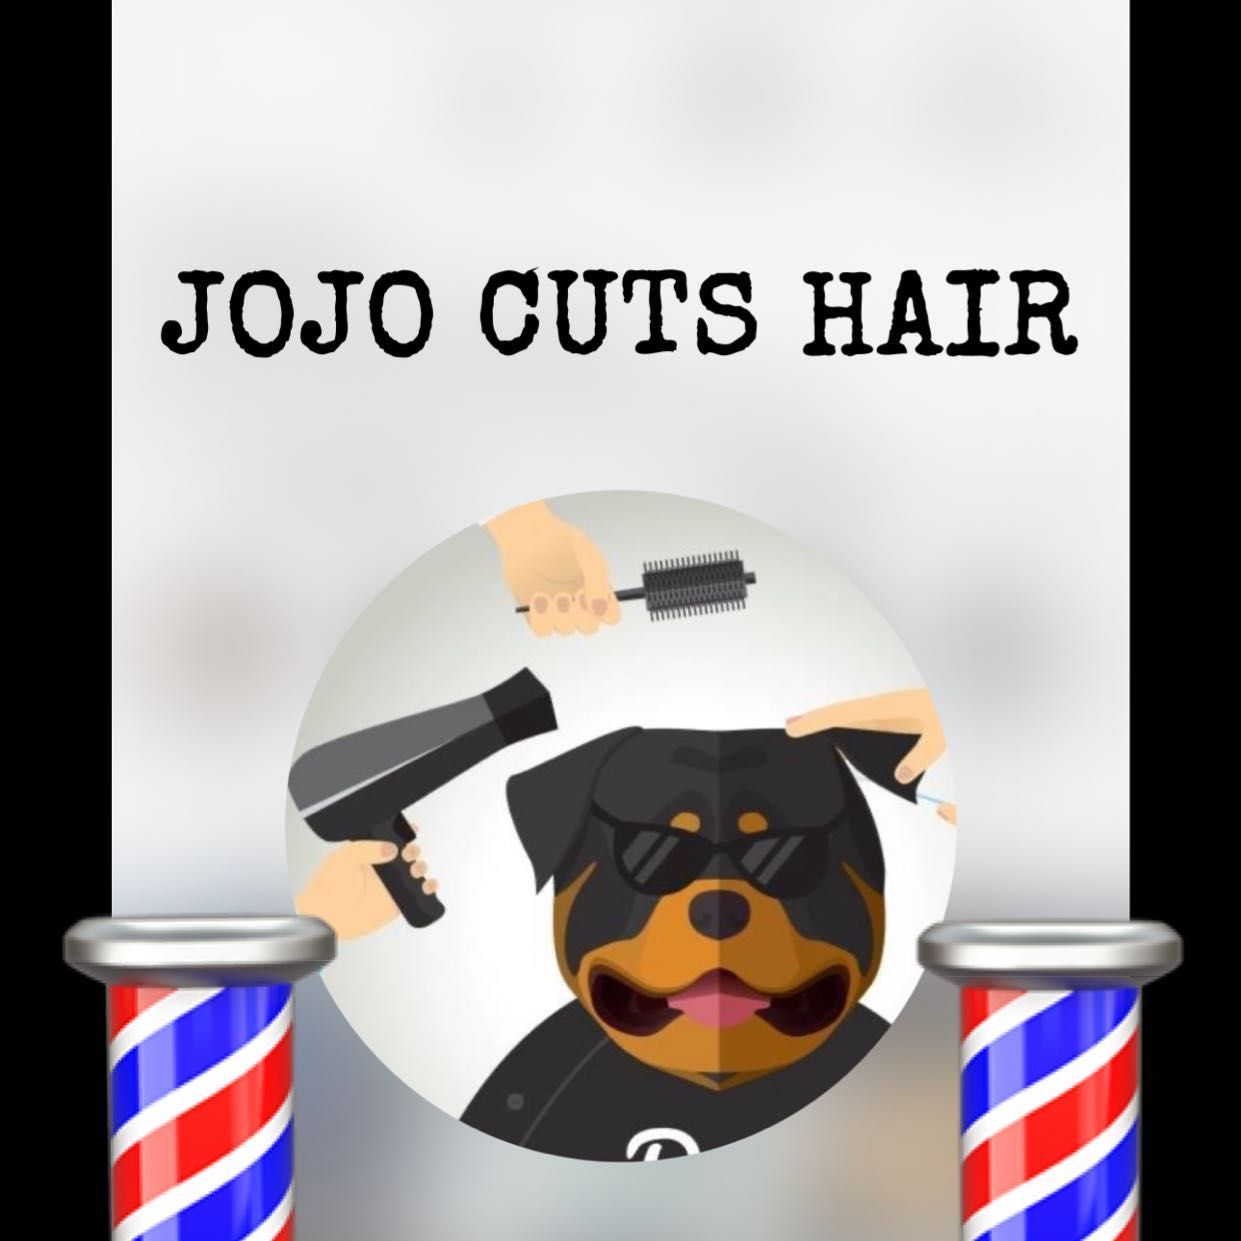 Jojo Cuts Hair, 5288 West 34th street, Suite 407, 407, Houston, 77092